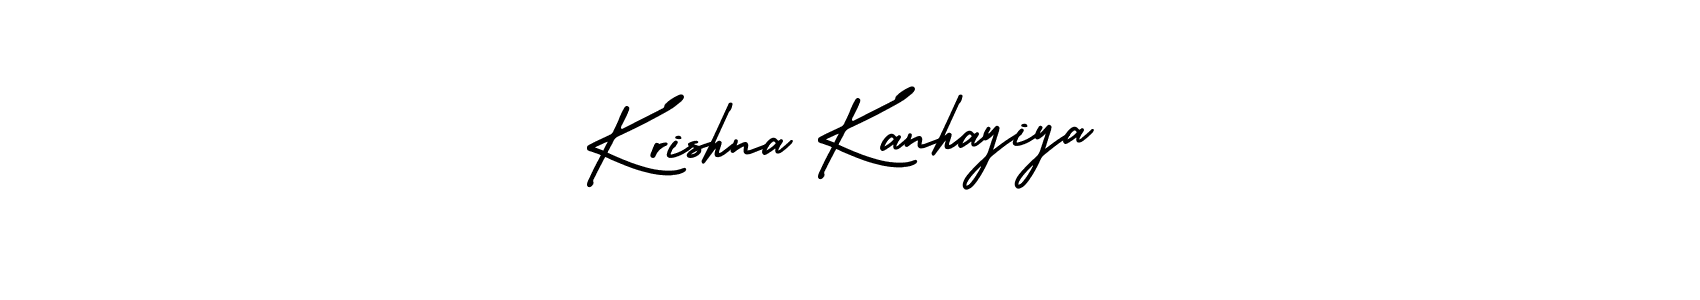 How to Draw Krishna Kanhayiya signature style? AmerikaSignatureDemo-Regular is a latest design signature styles for name Krishna Kanhayiya. Krishna Kanhayiya signature style 3 images and pictures png